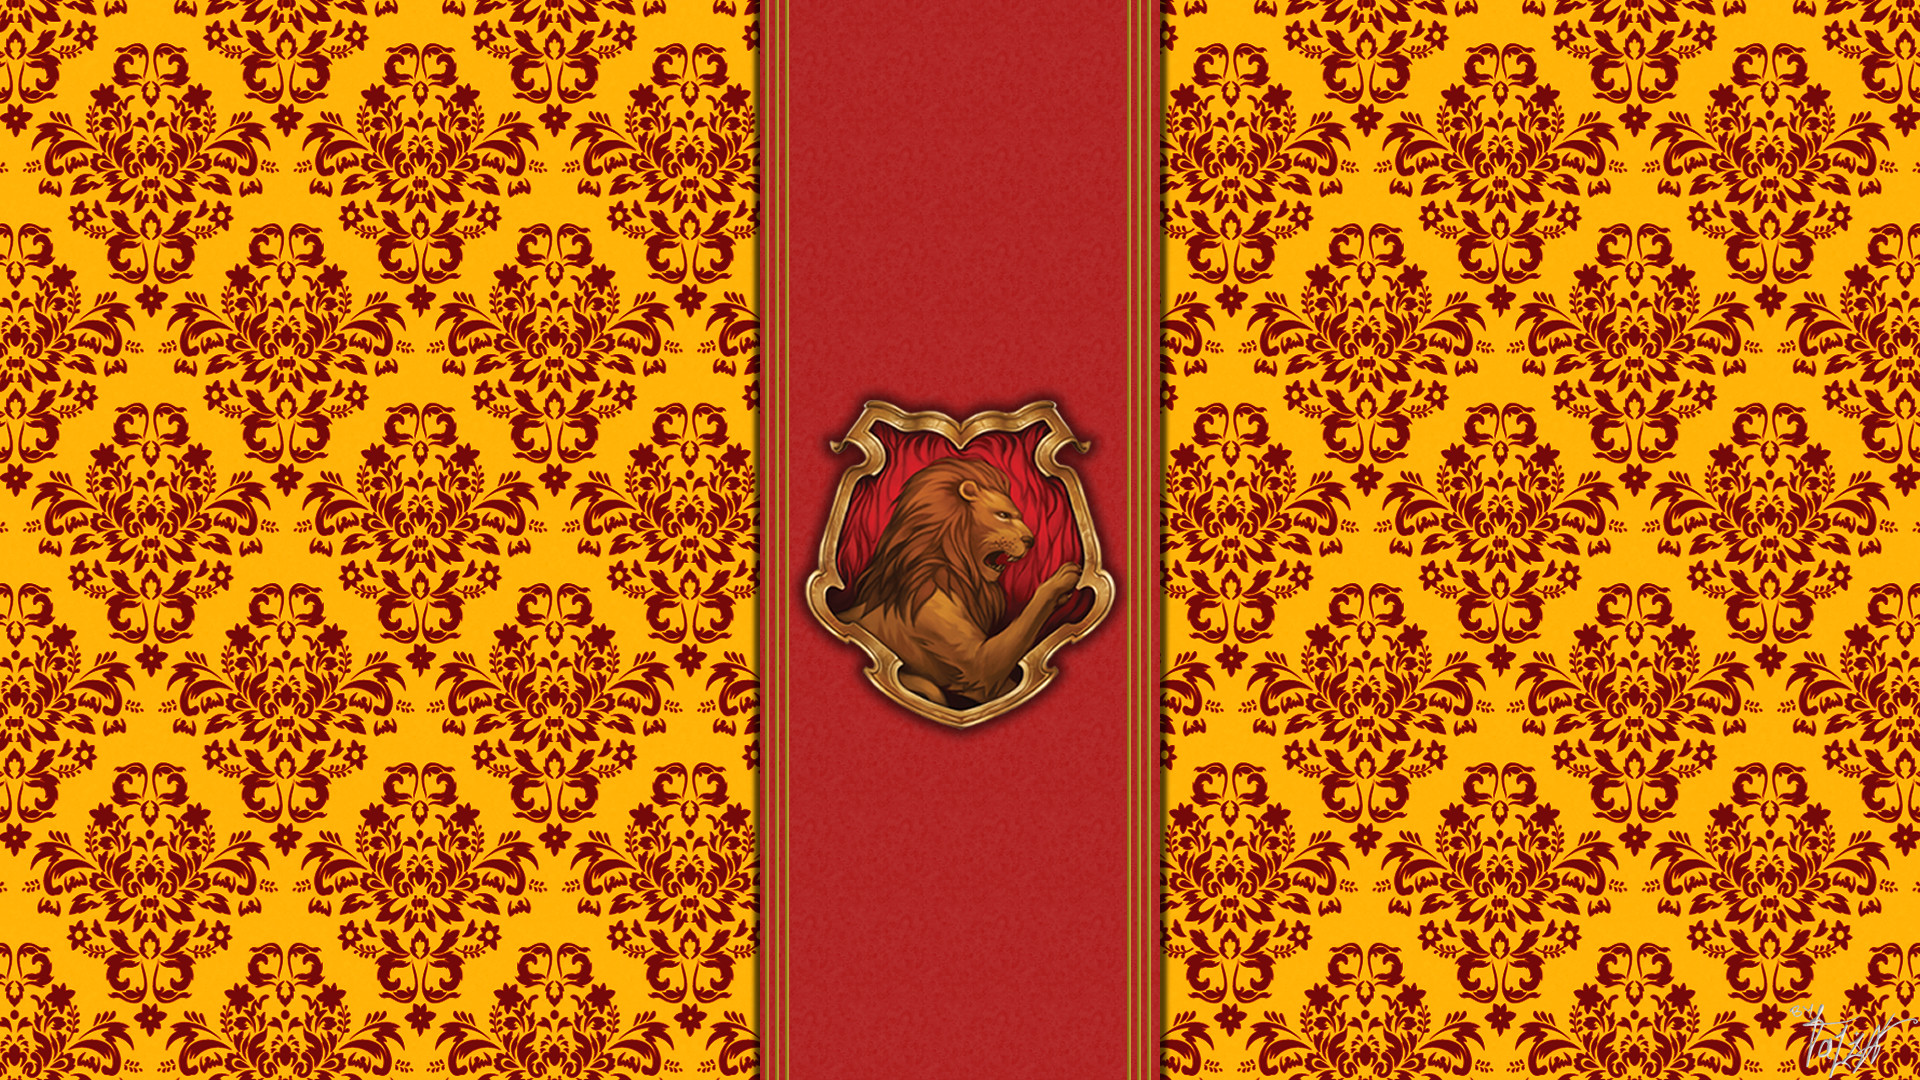 1920x1080 hogwarts_house_wallpaper___gryffindor_by_theladyavatar-d4ol8mt.jpg